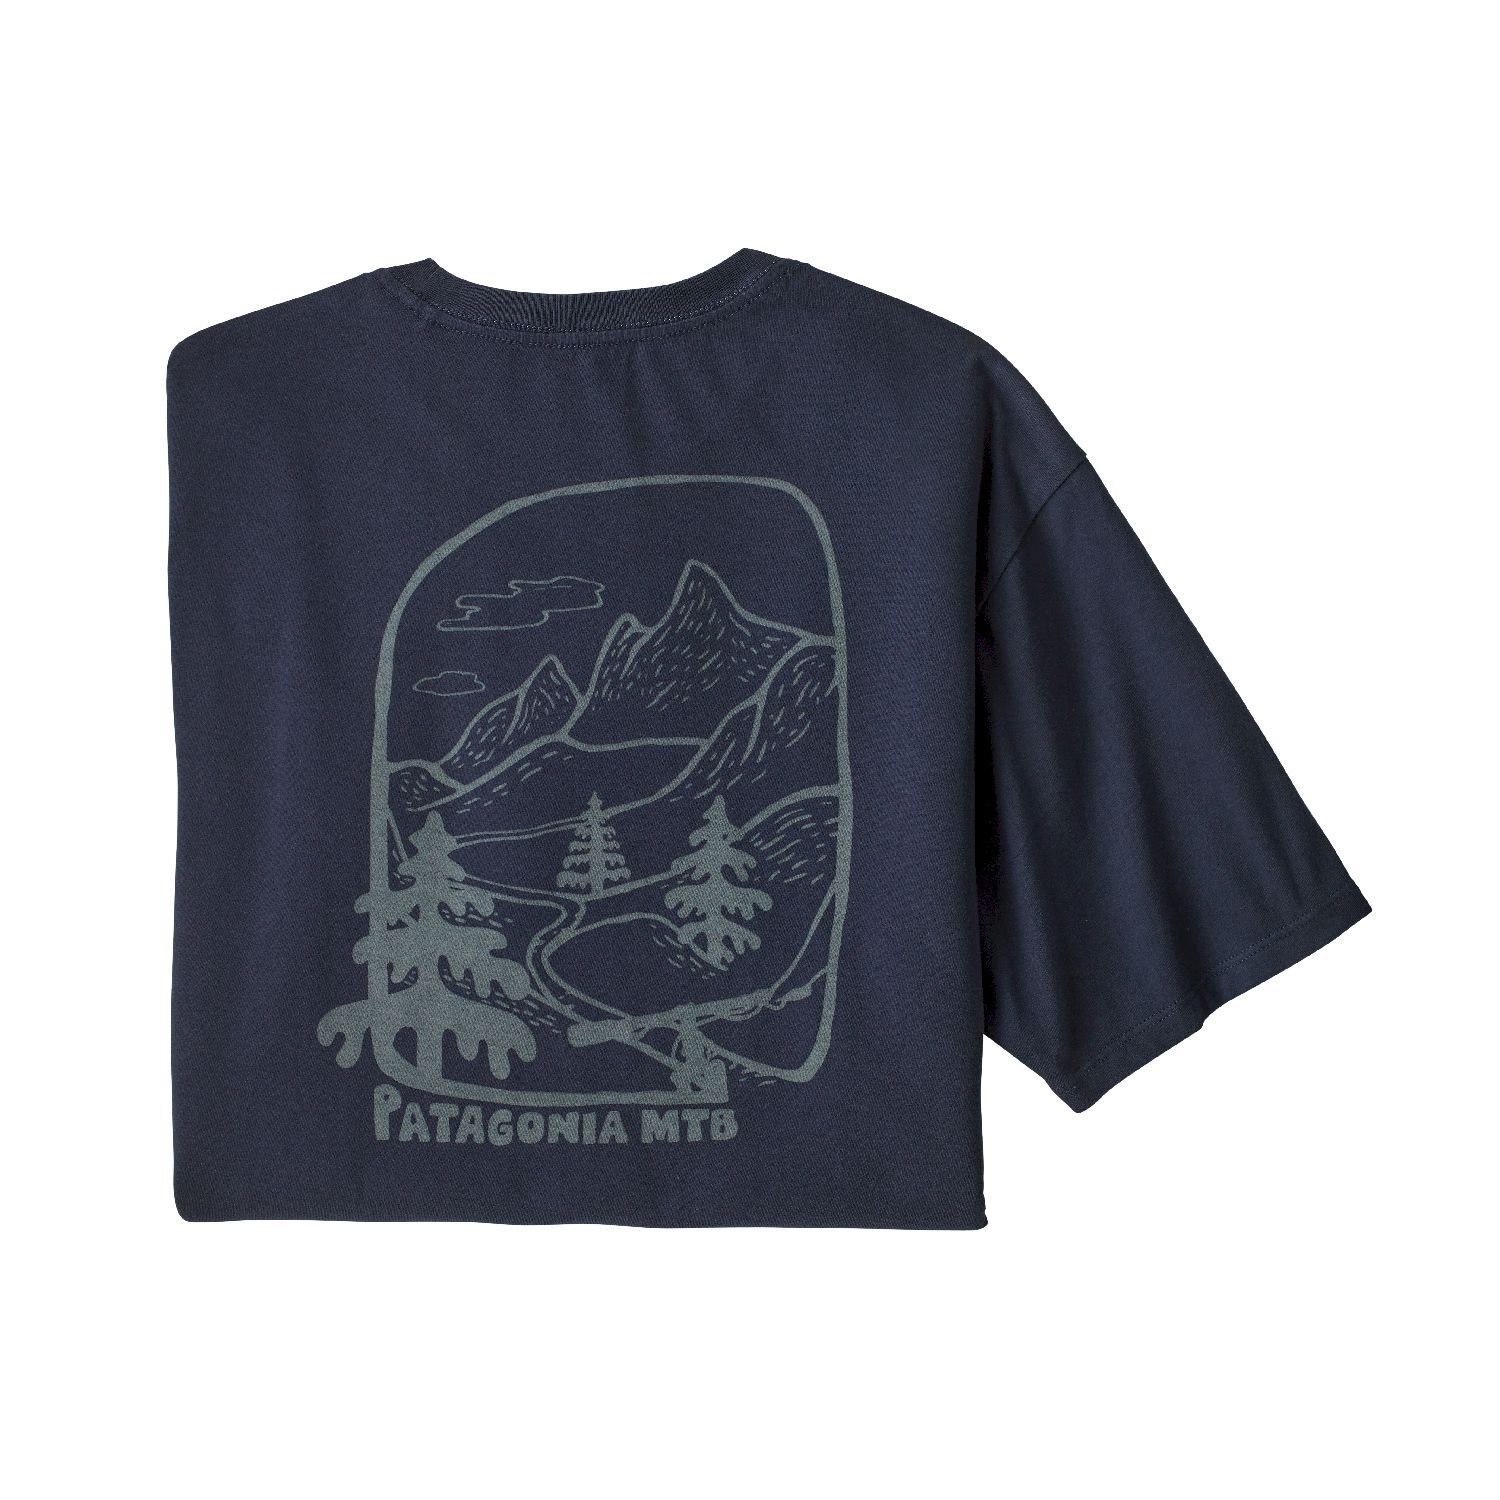 Patagonia Roam the Dirt Organic - T-shirt - Uomo